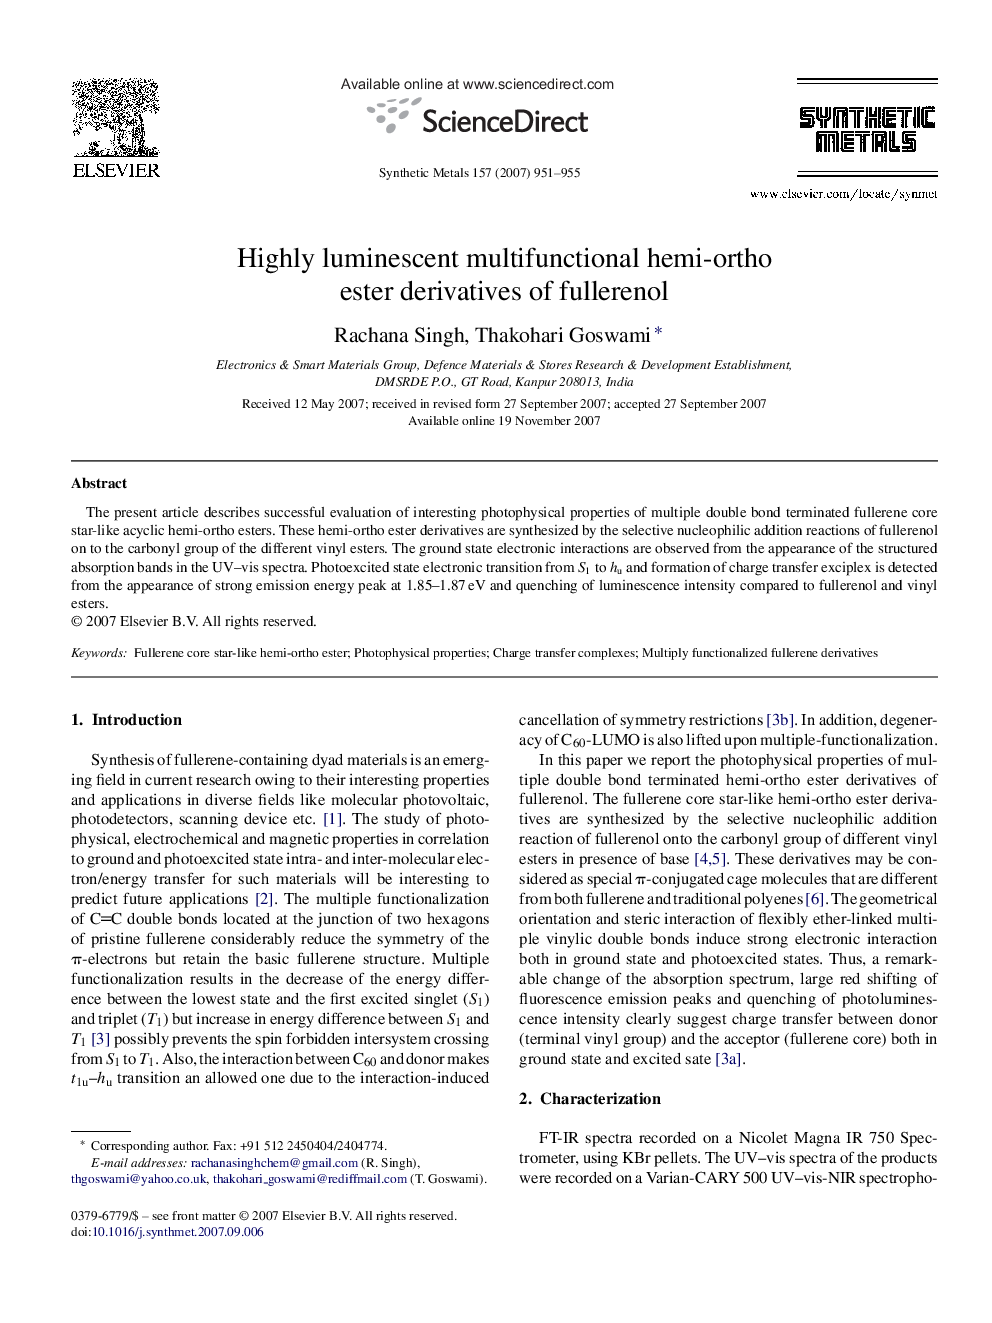 Highly luminescent multifunctional hemi-ortho ester derivatives of fullerenol